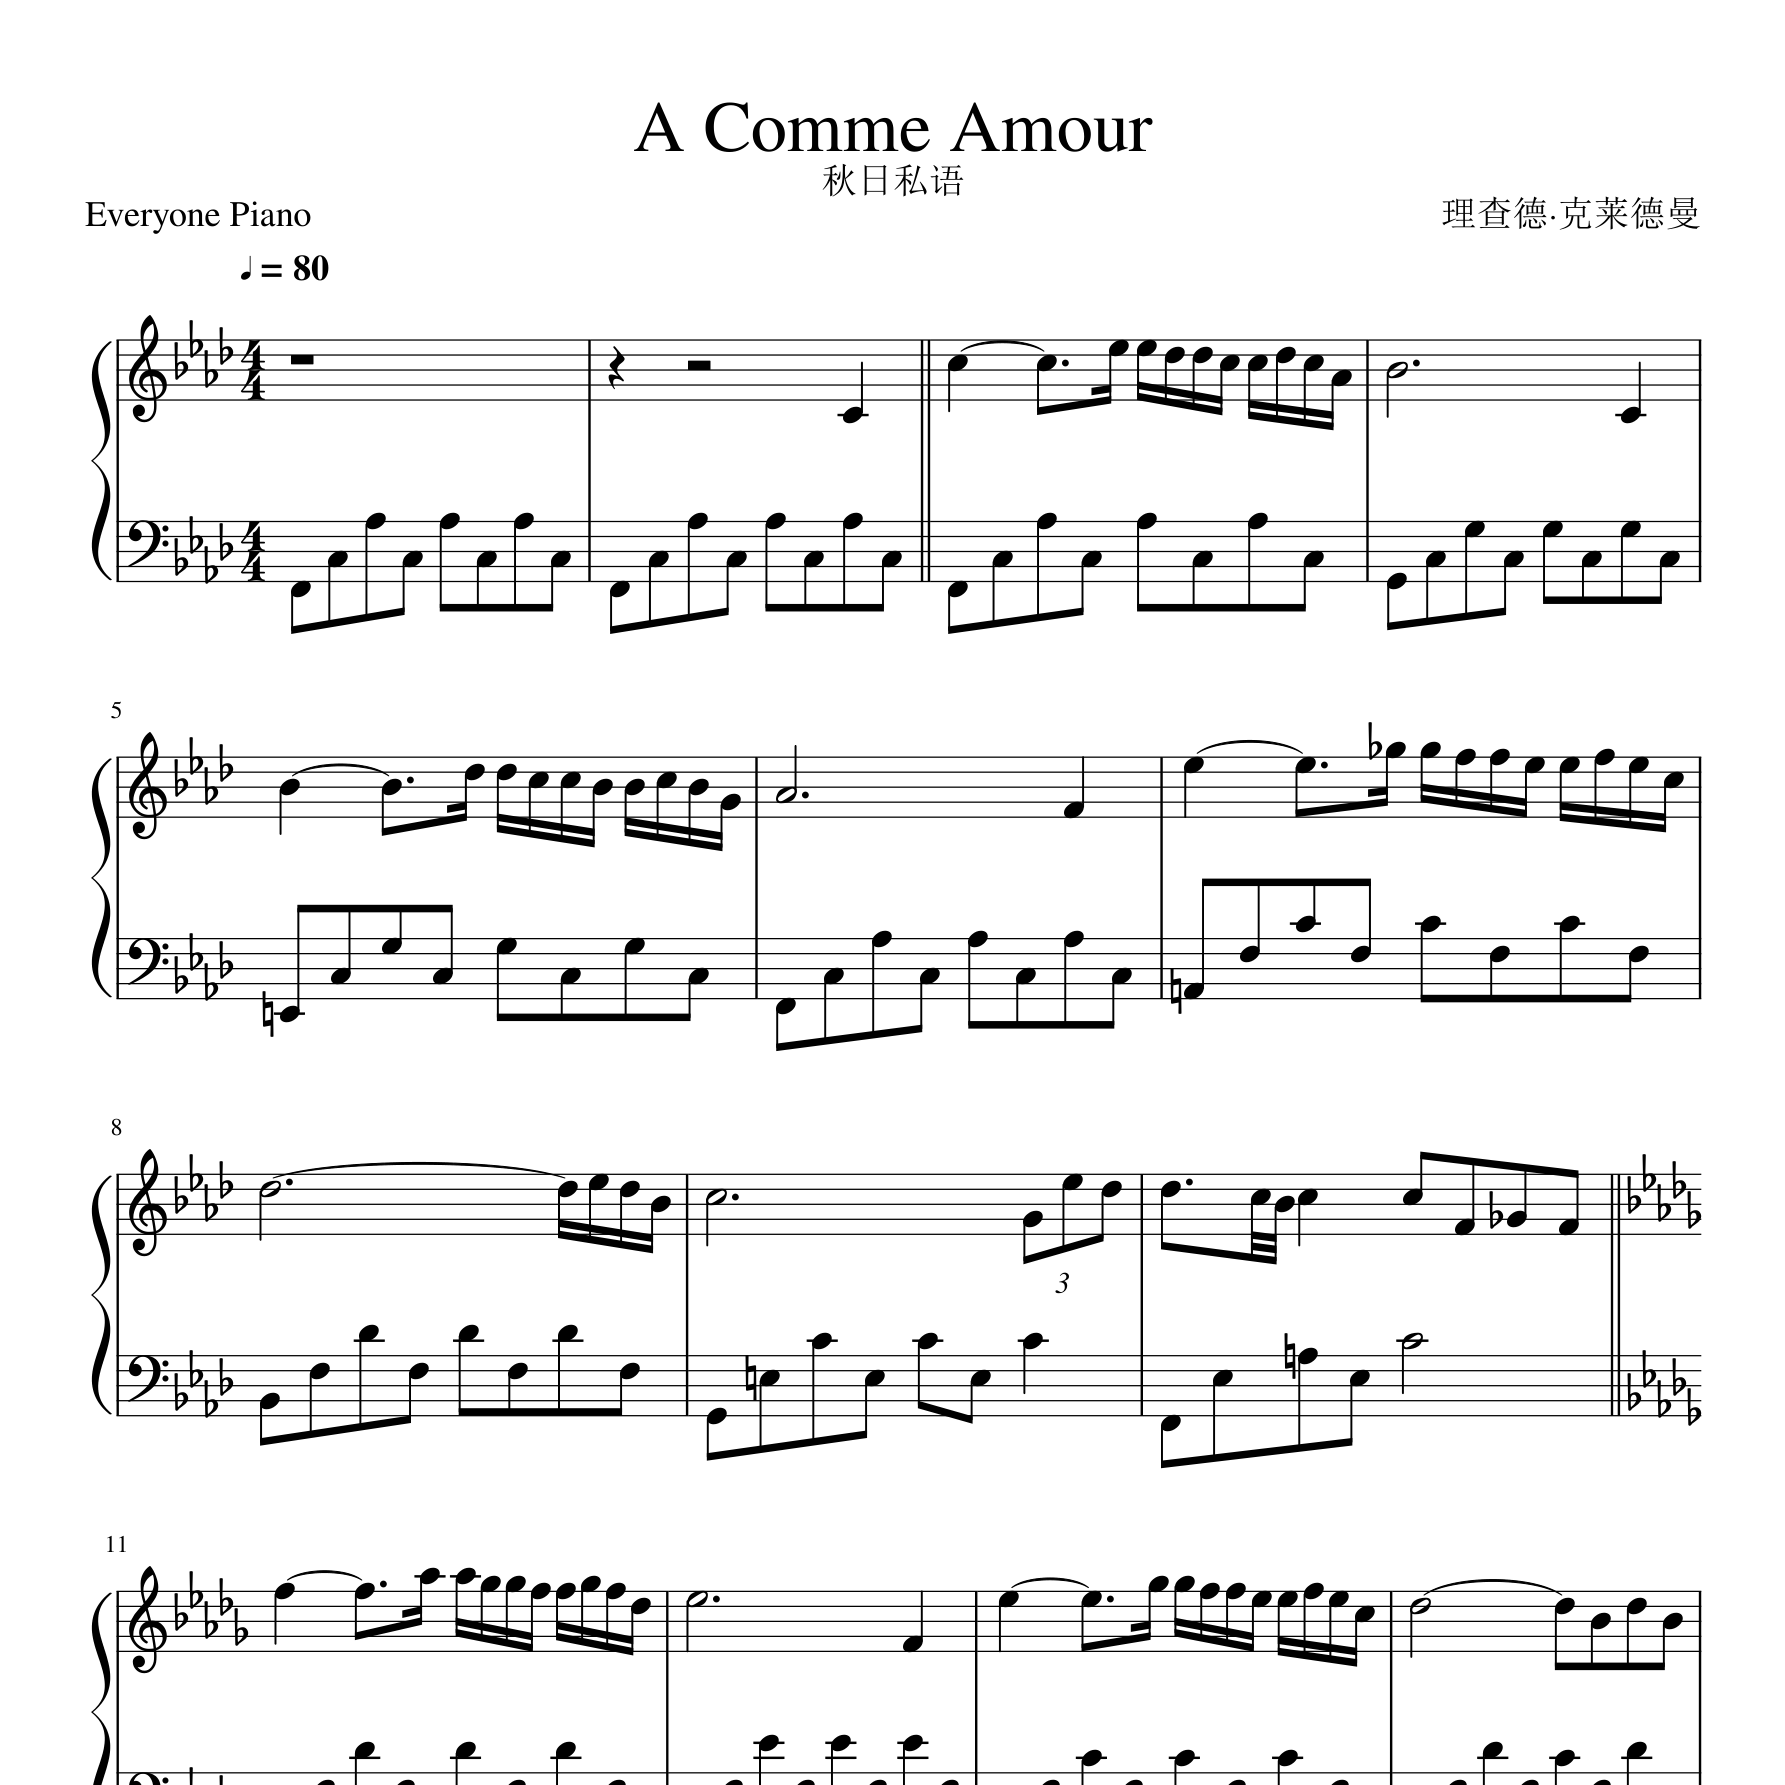 A Comm amour 秋日私语钢琴谱